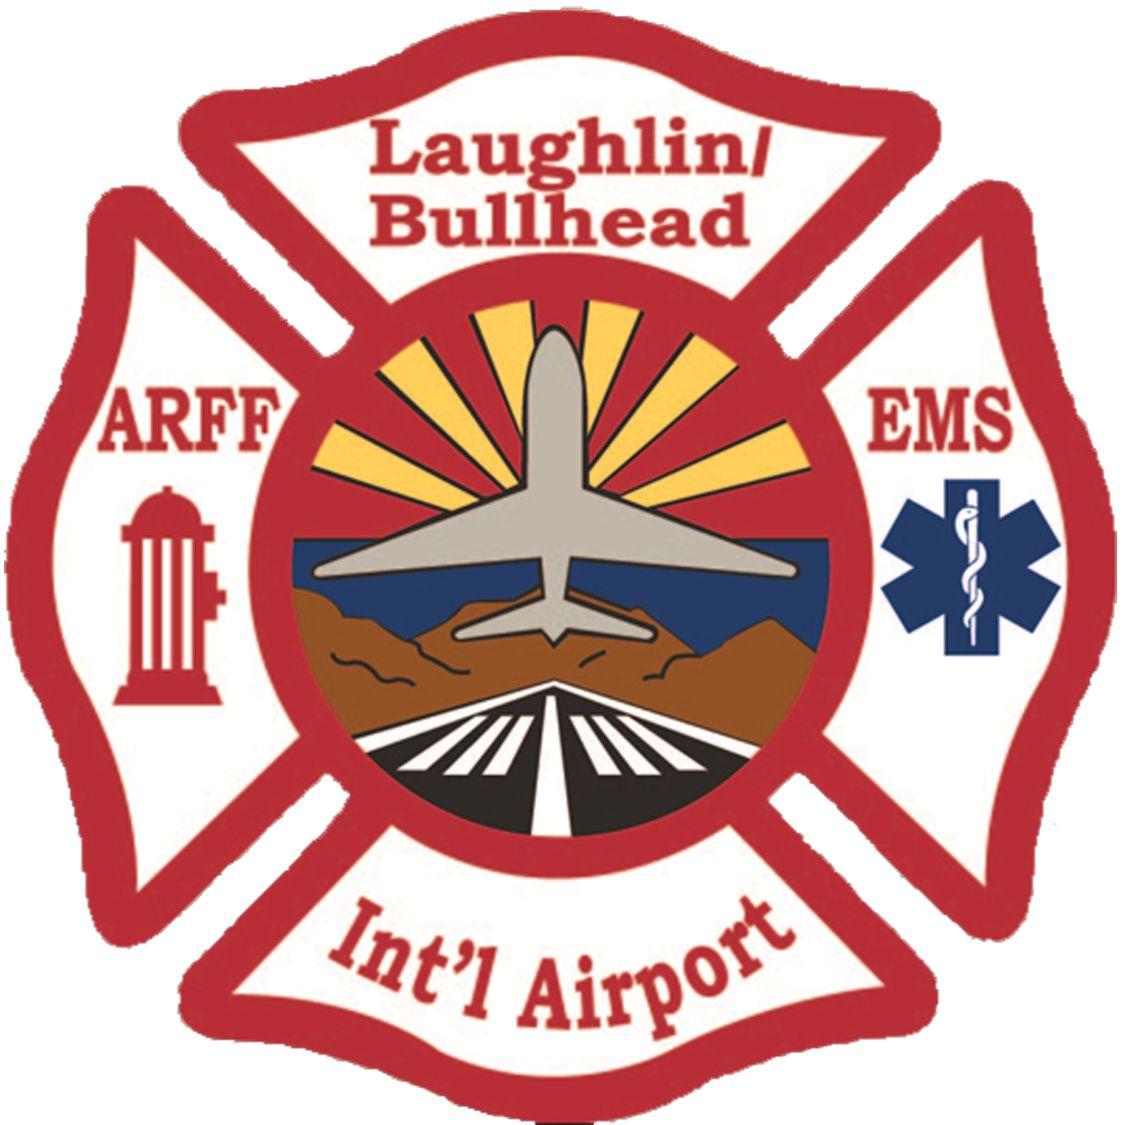 Bullhead Logo - File:ARFF LOGO Bullhead.JPG - Wikimedia Commons